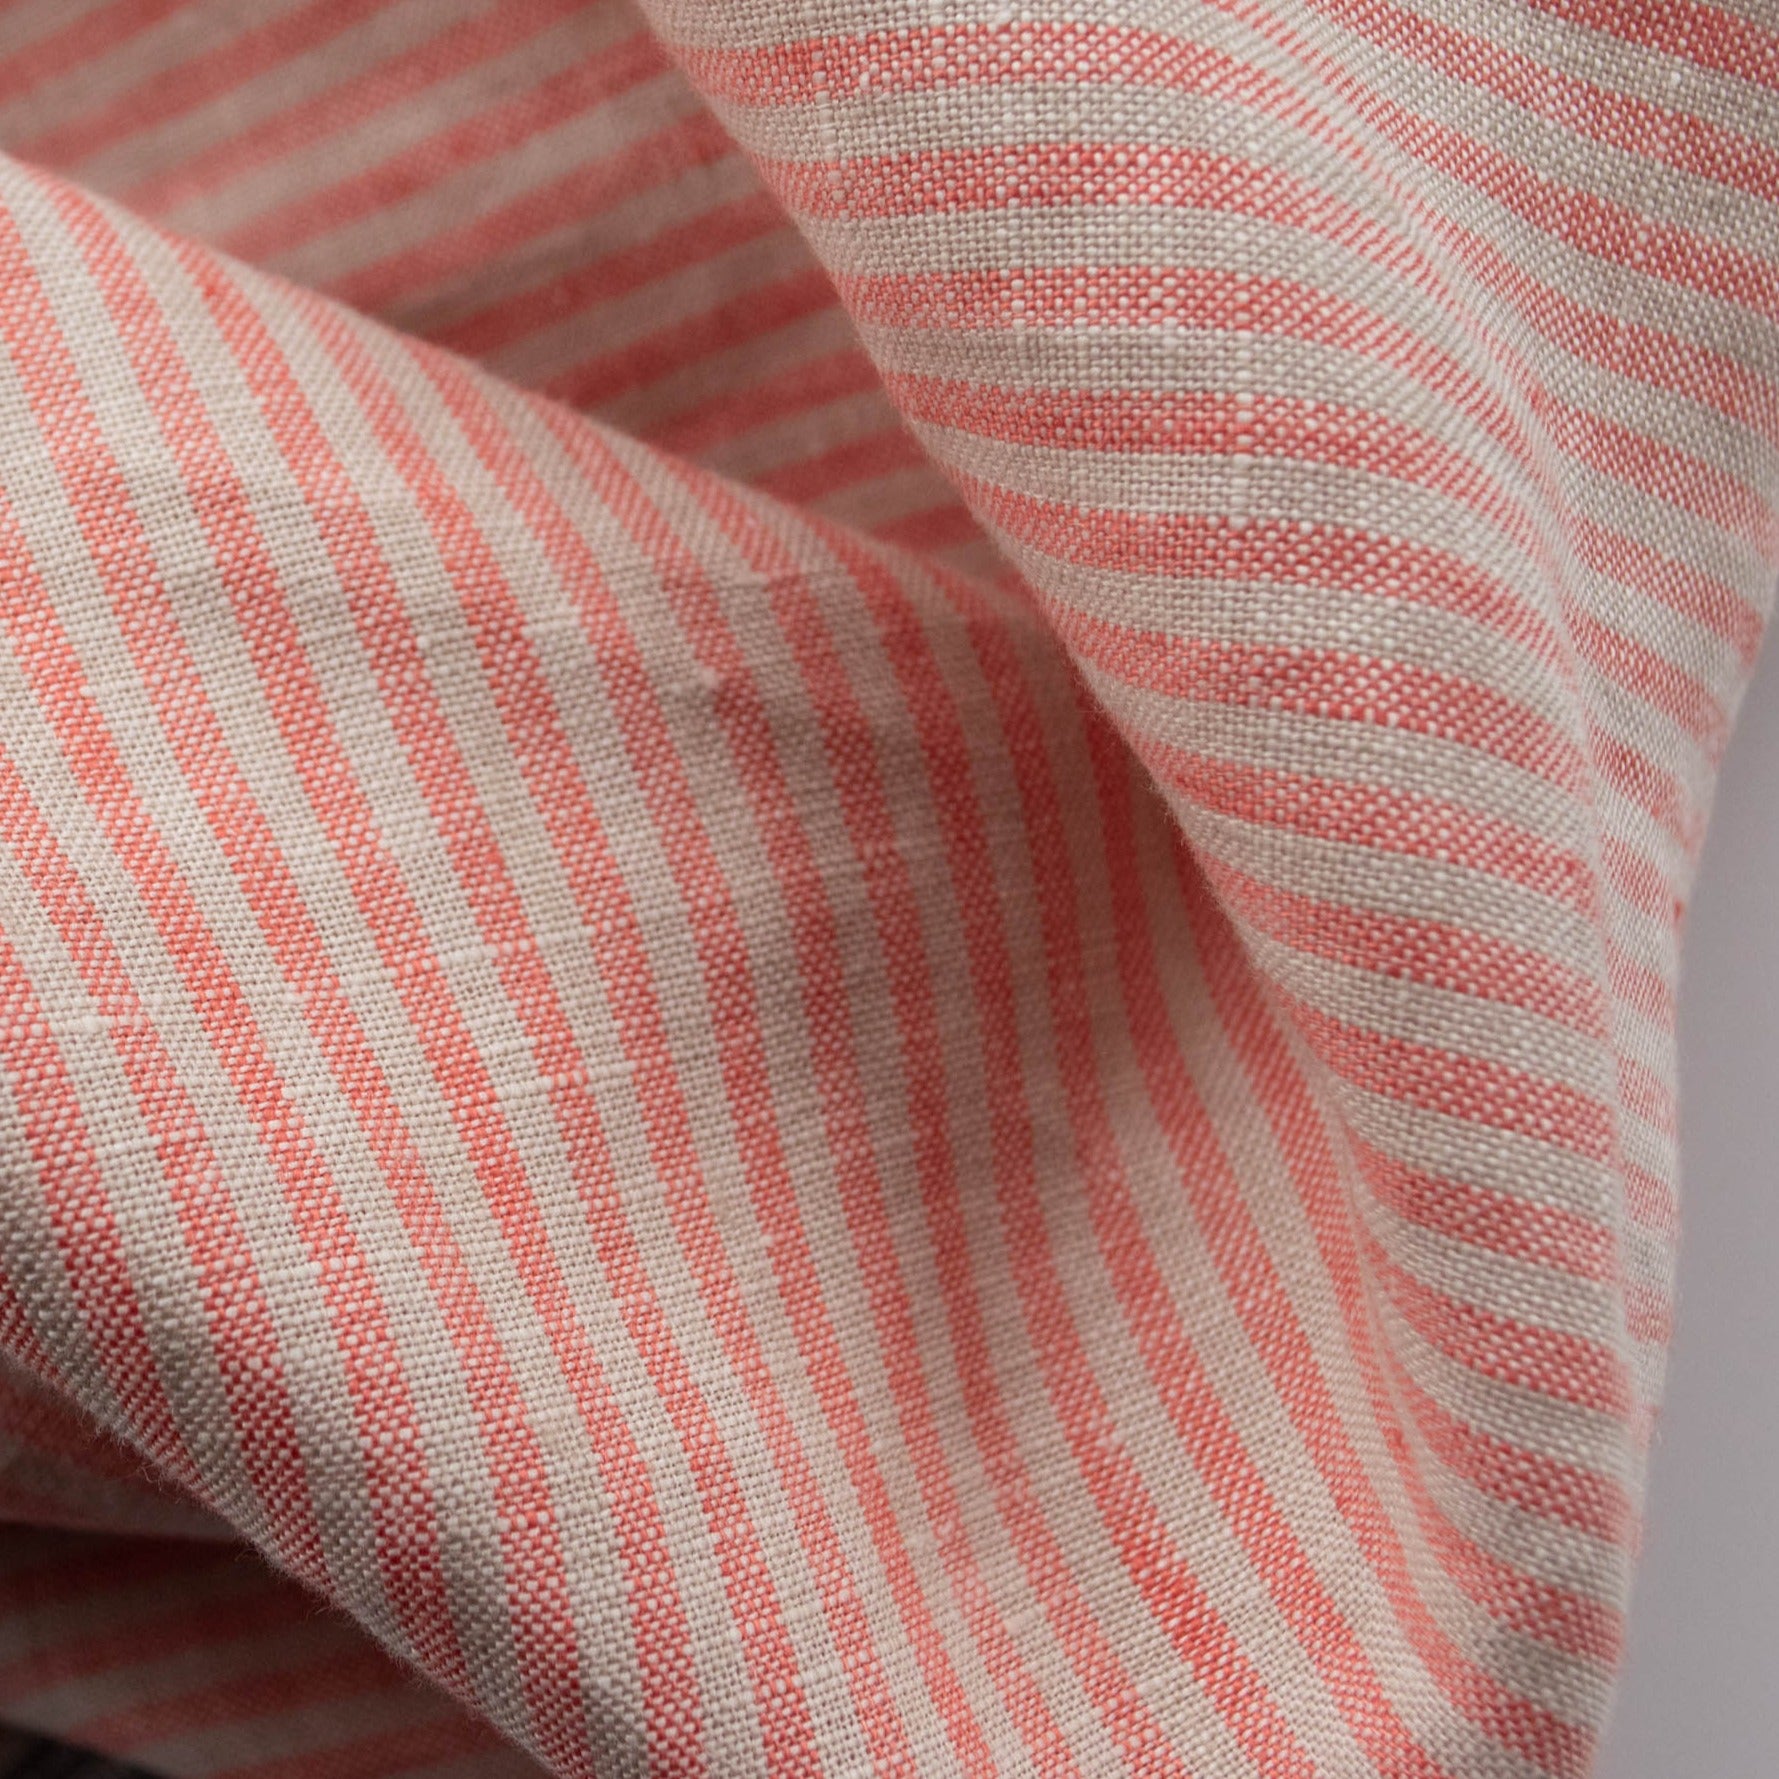 Stripe Linen - Coral - MaaiDesign Fabrics